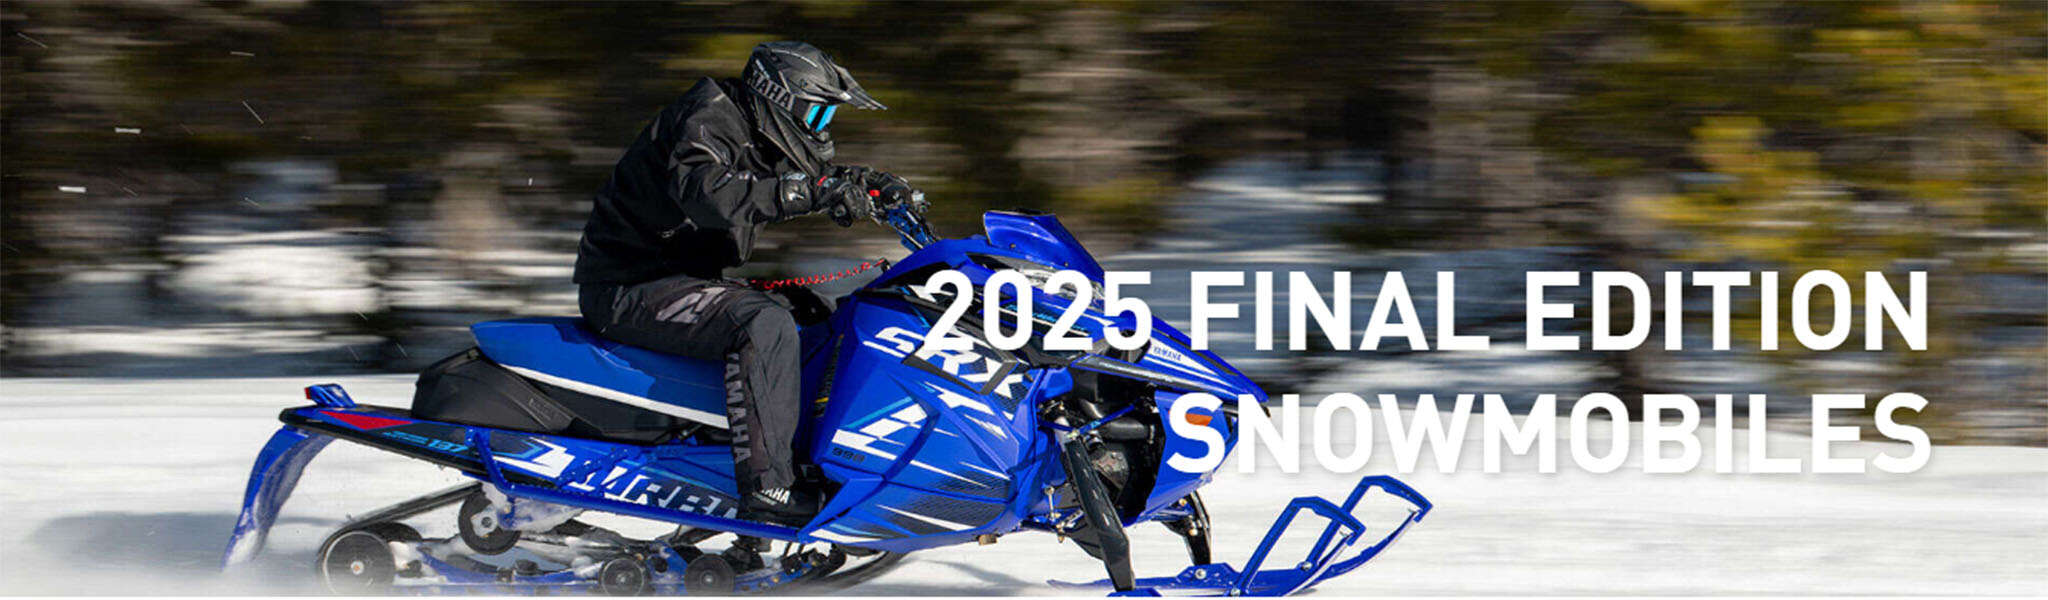 Yamaha-Snowmobile-2025 2048X600.jpg